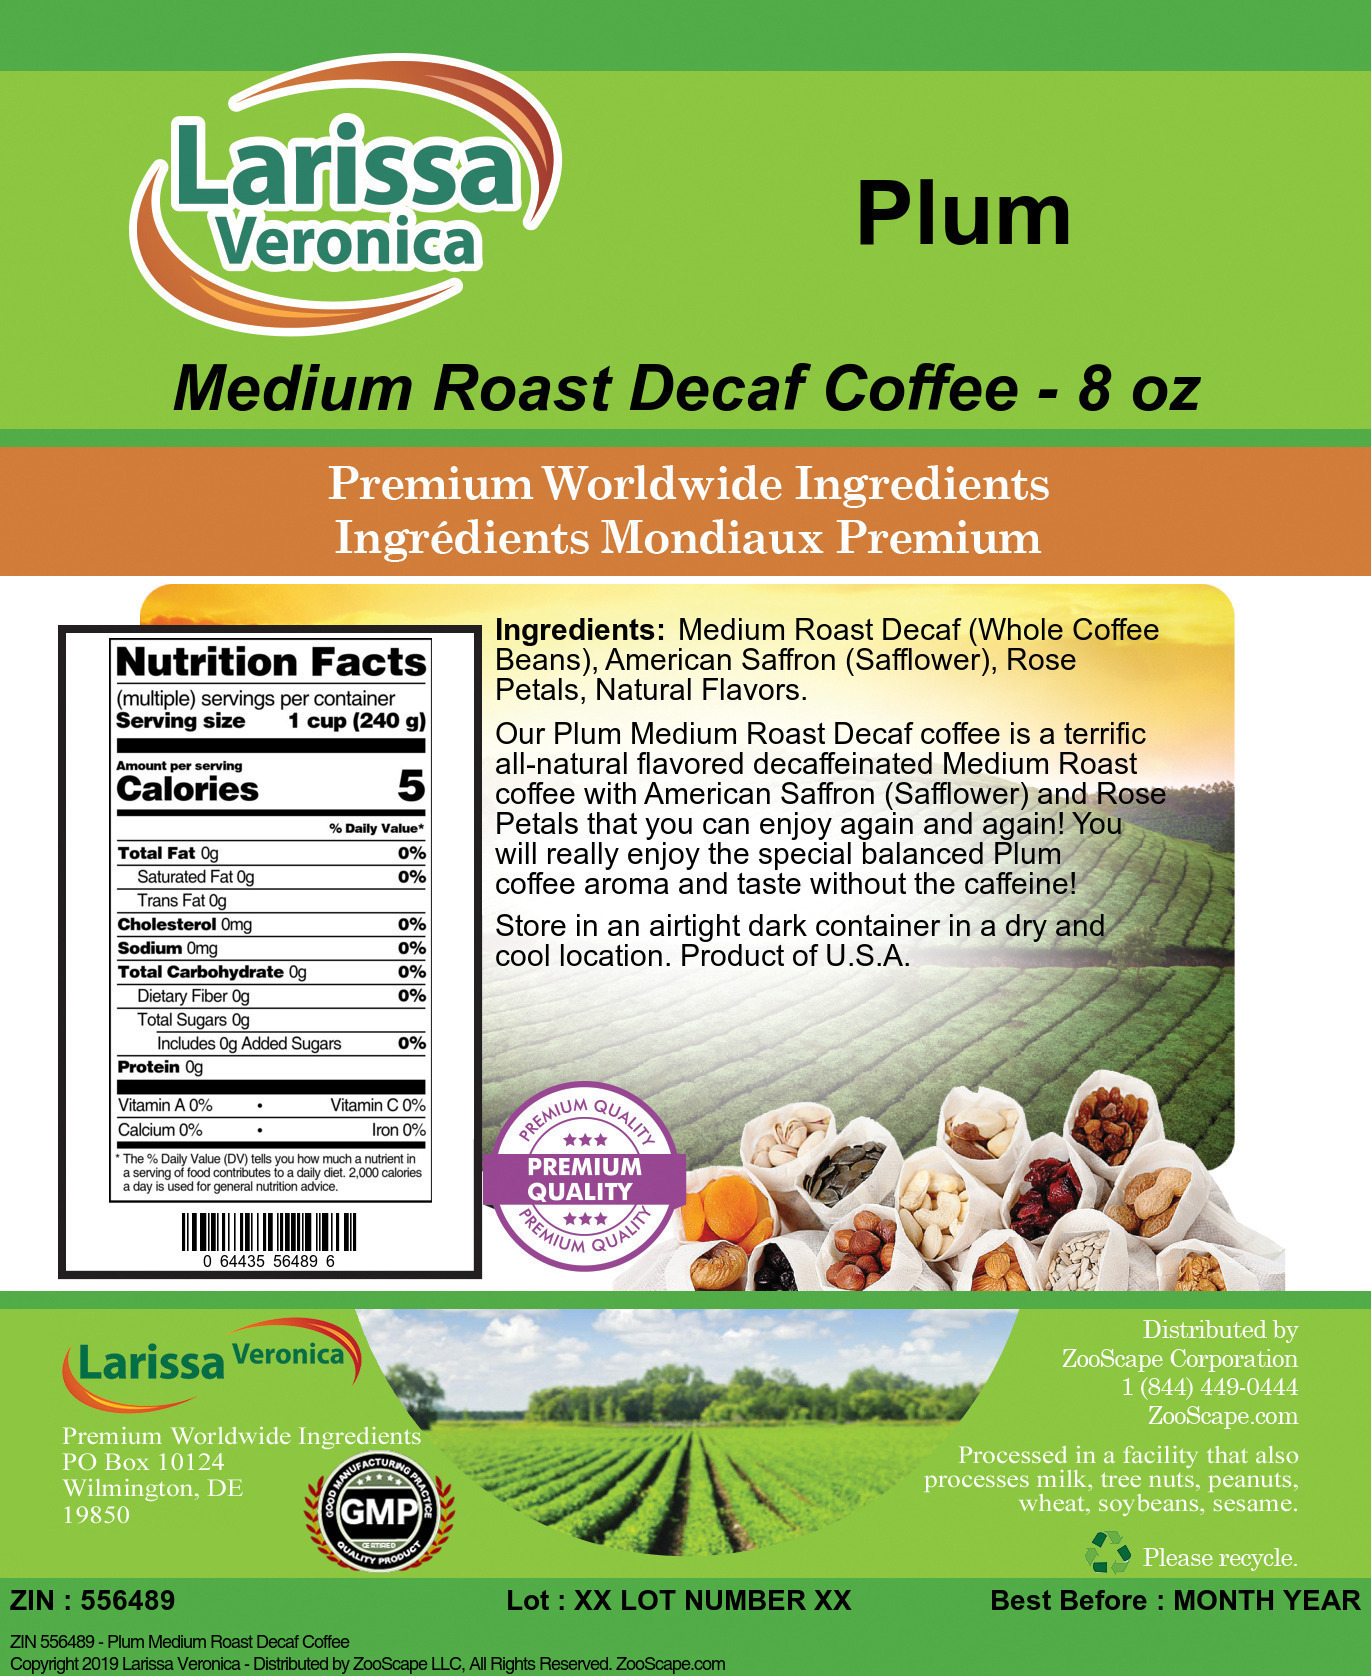 Plum Medium Roast Decaf Coffee - Label